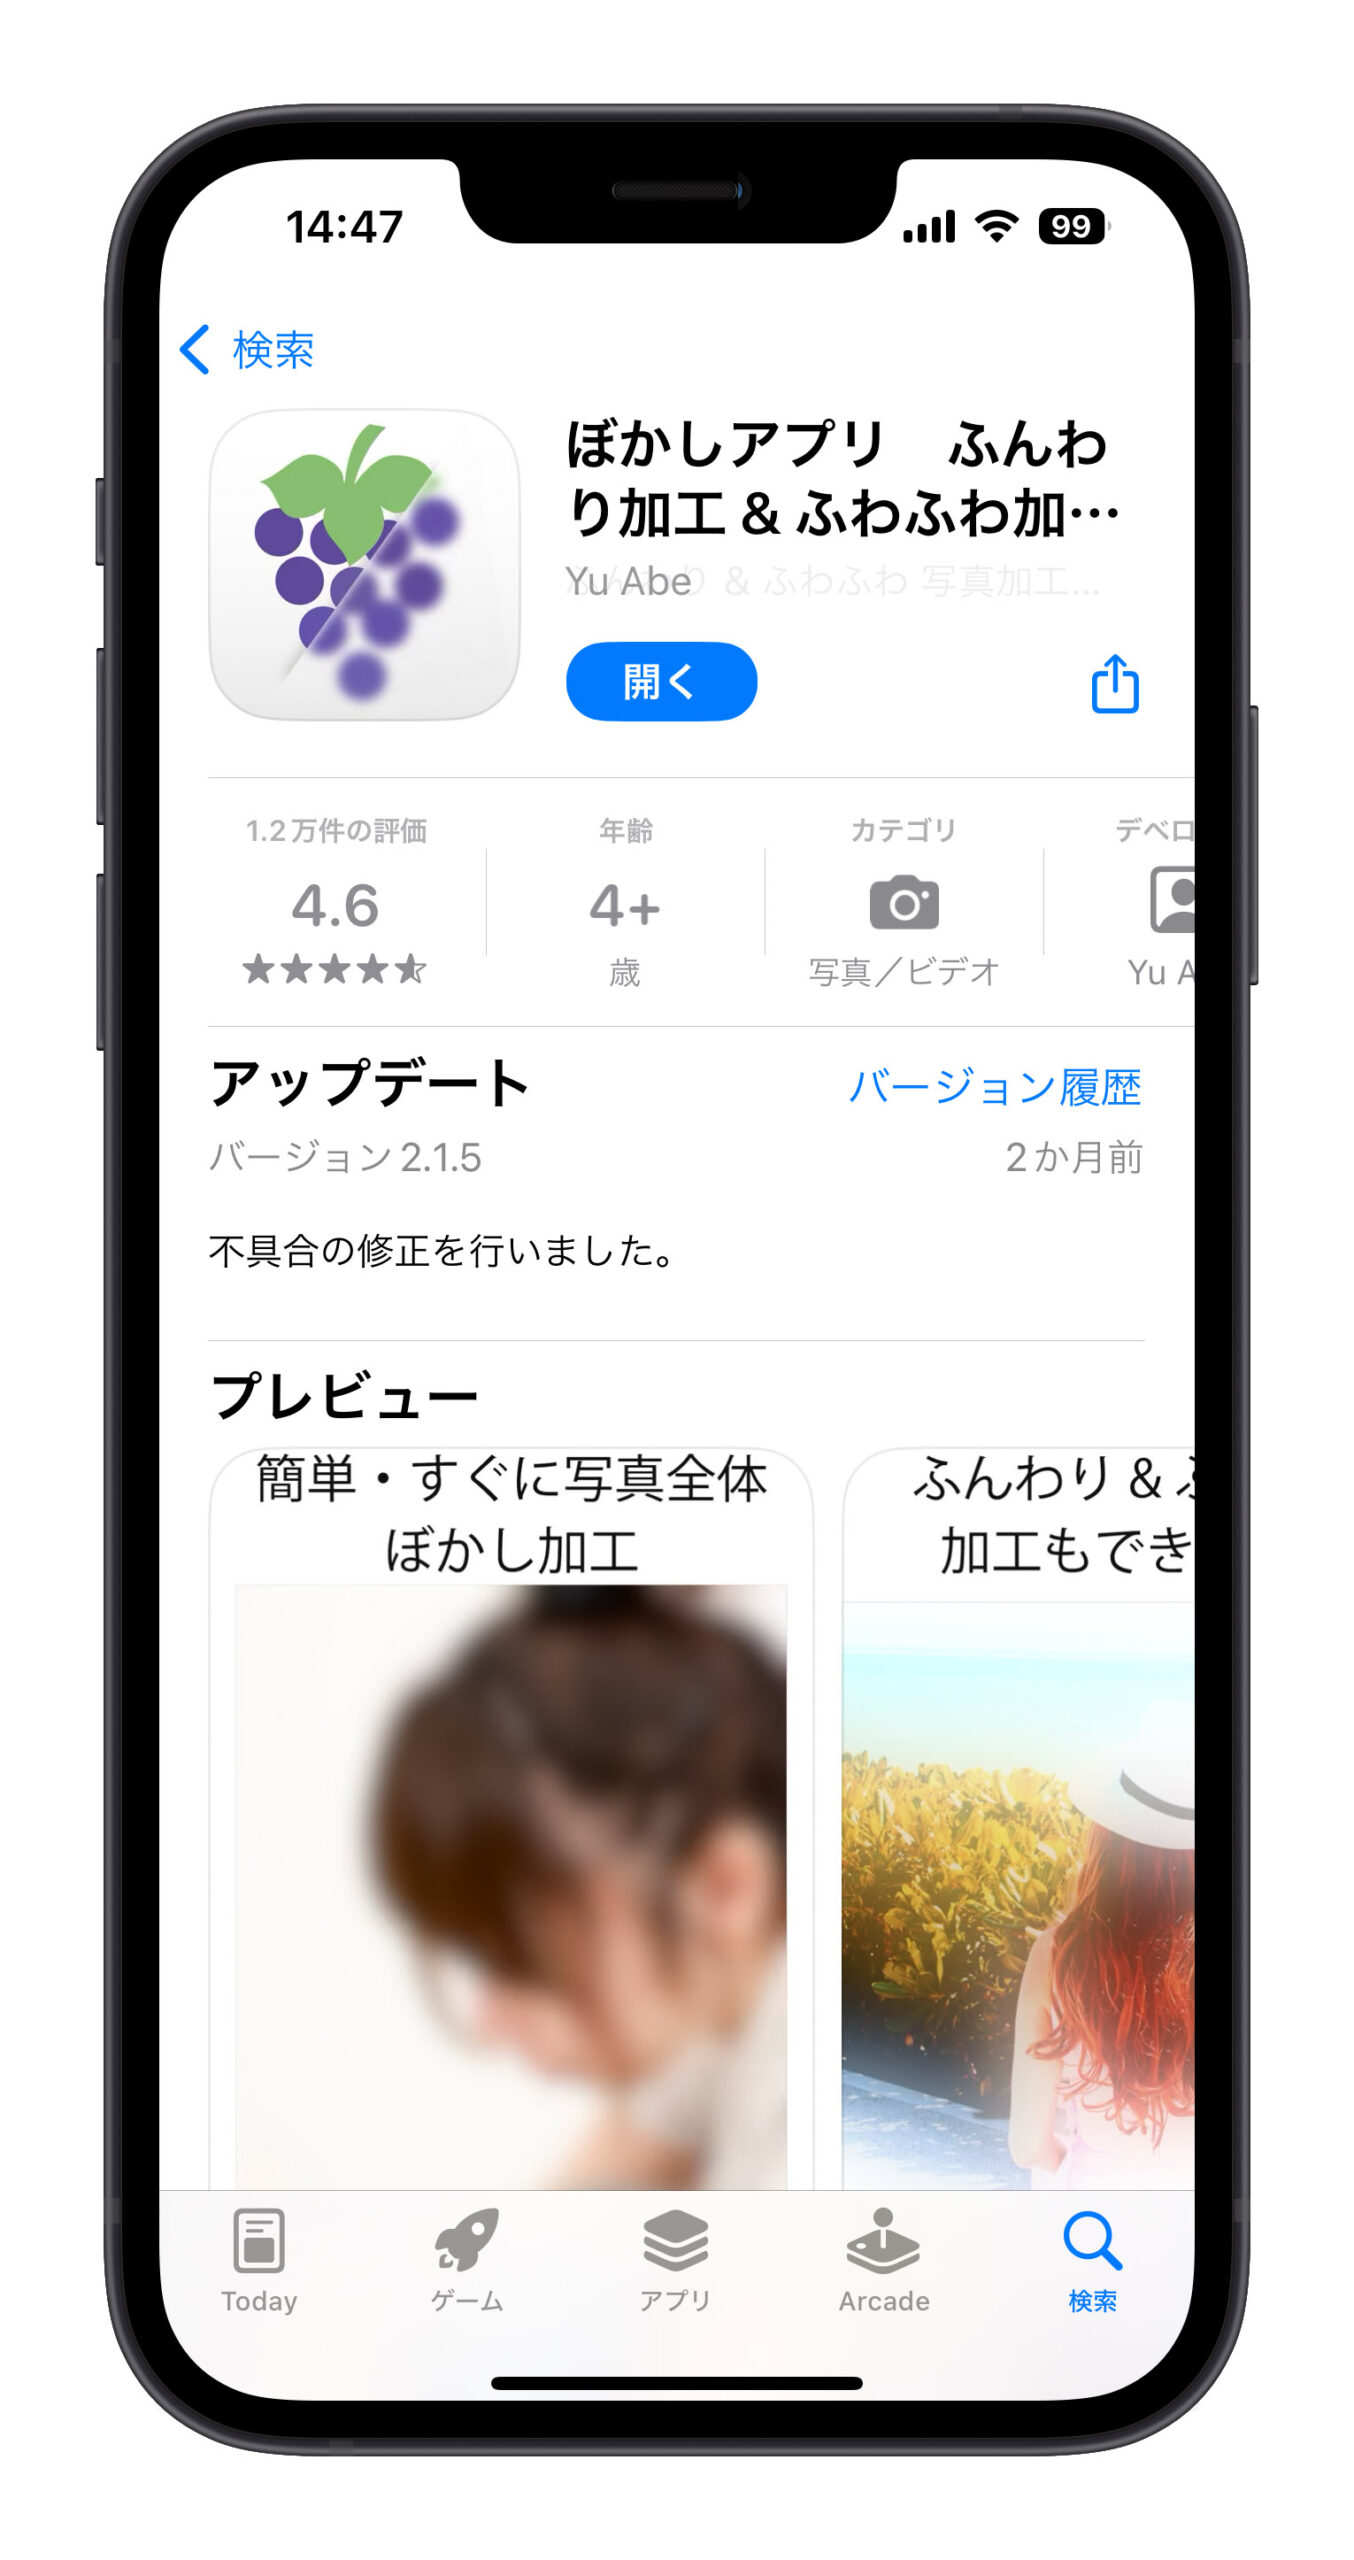 iPhone ぼかしアプリ